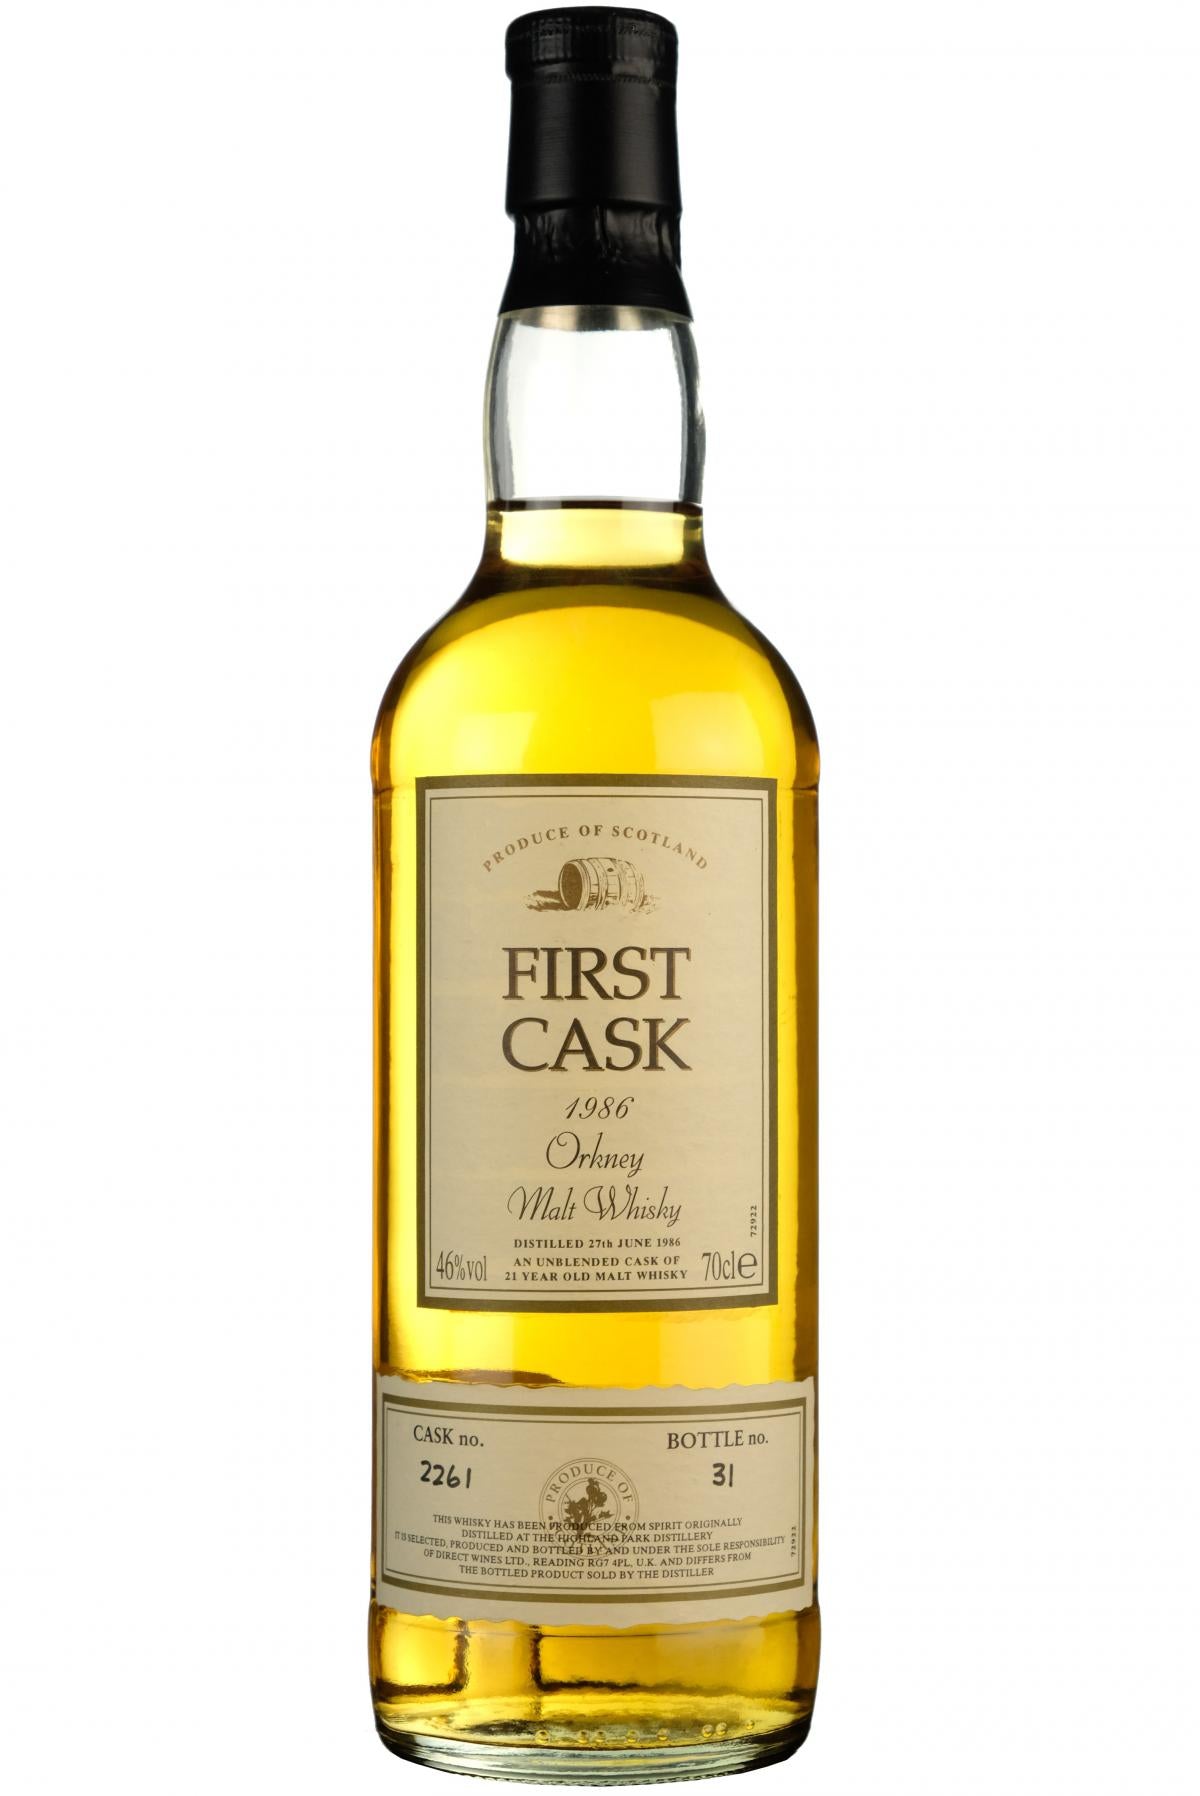 highland park 1986, 21 year old, first cask 2261, single malt scotch whisky